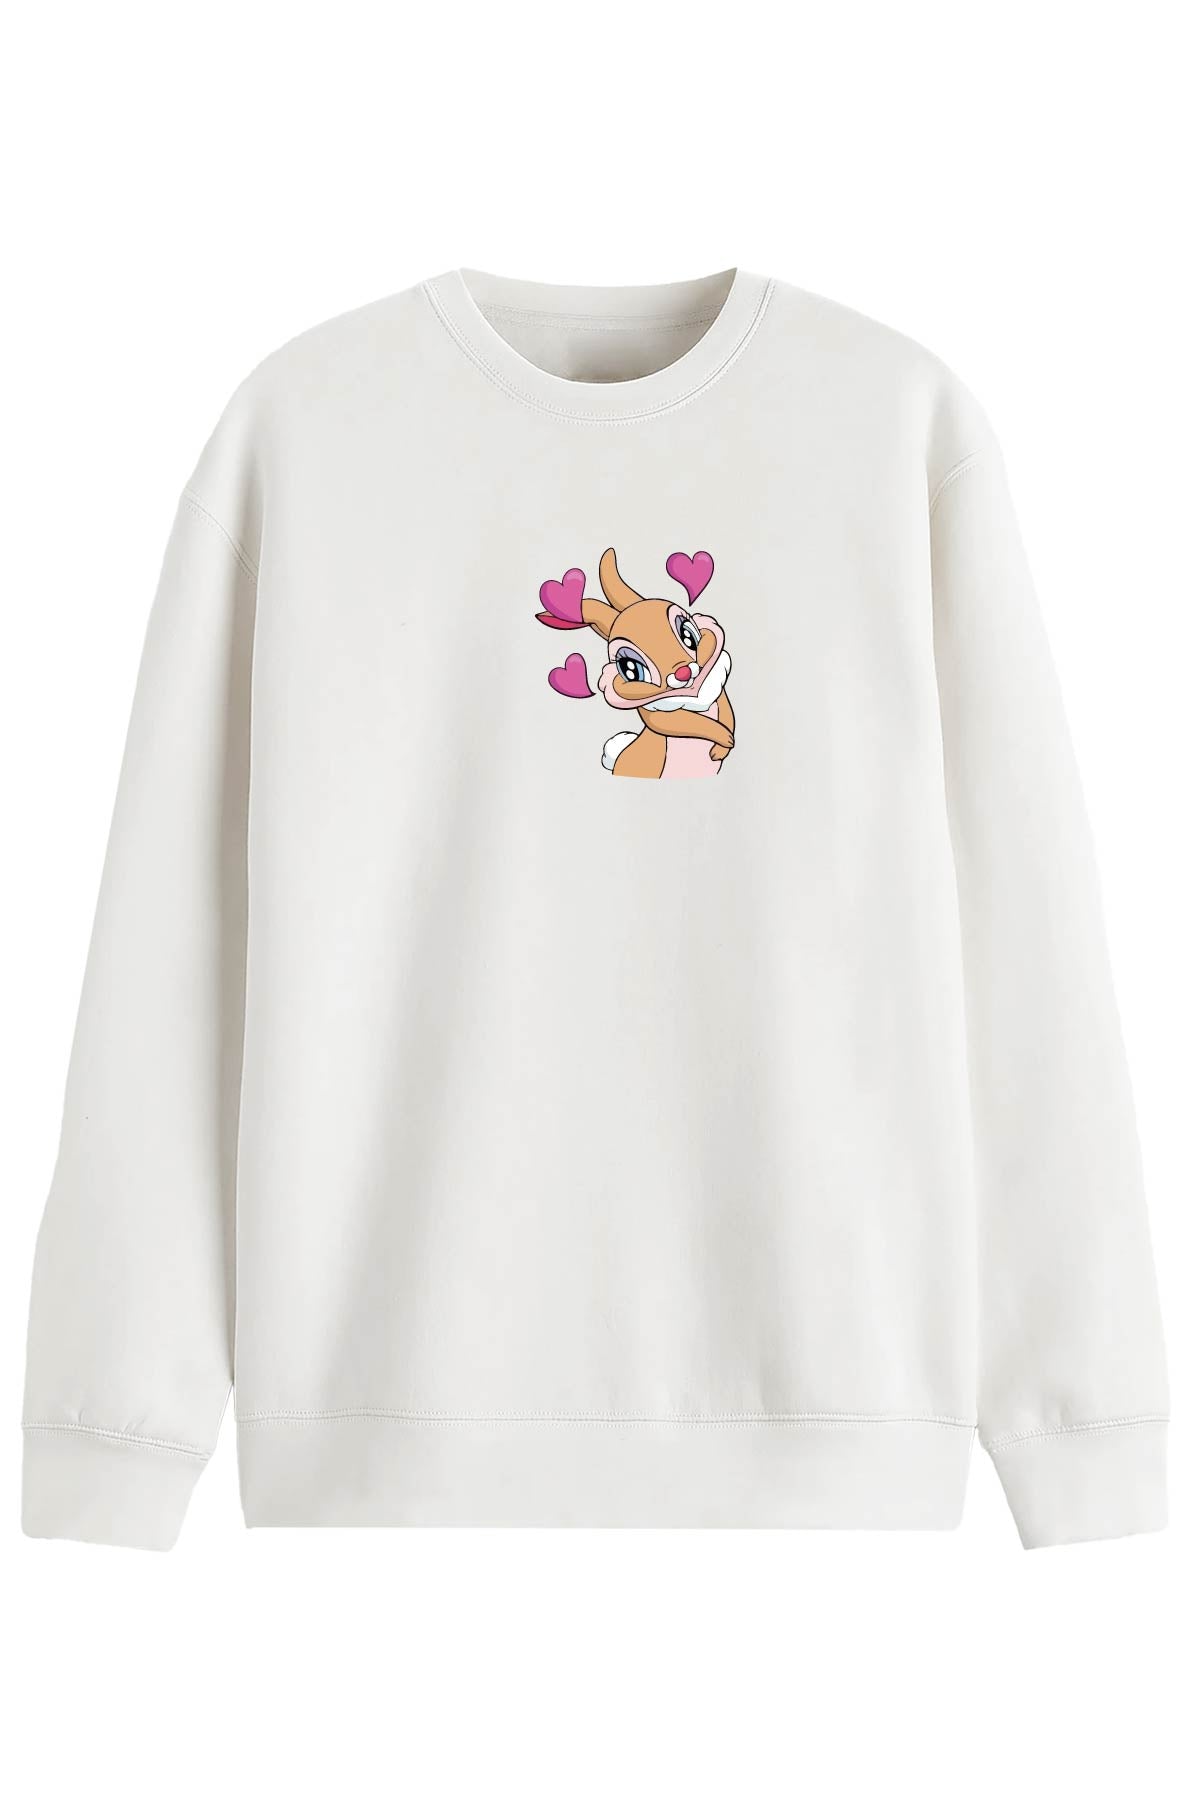 Thumper Love -  Sweatshirt